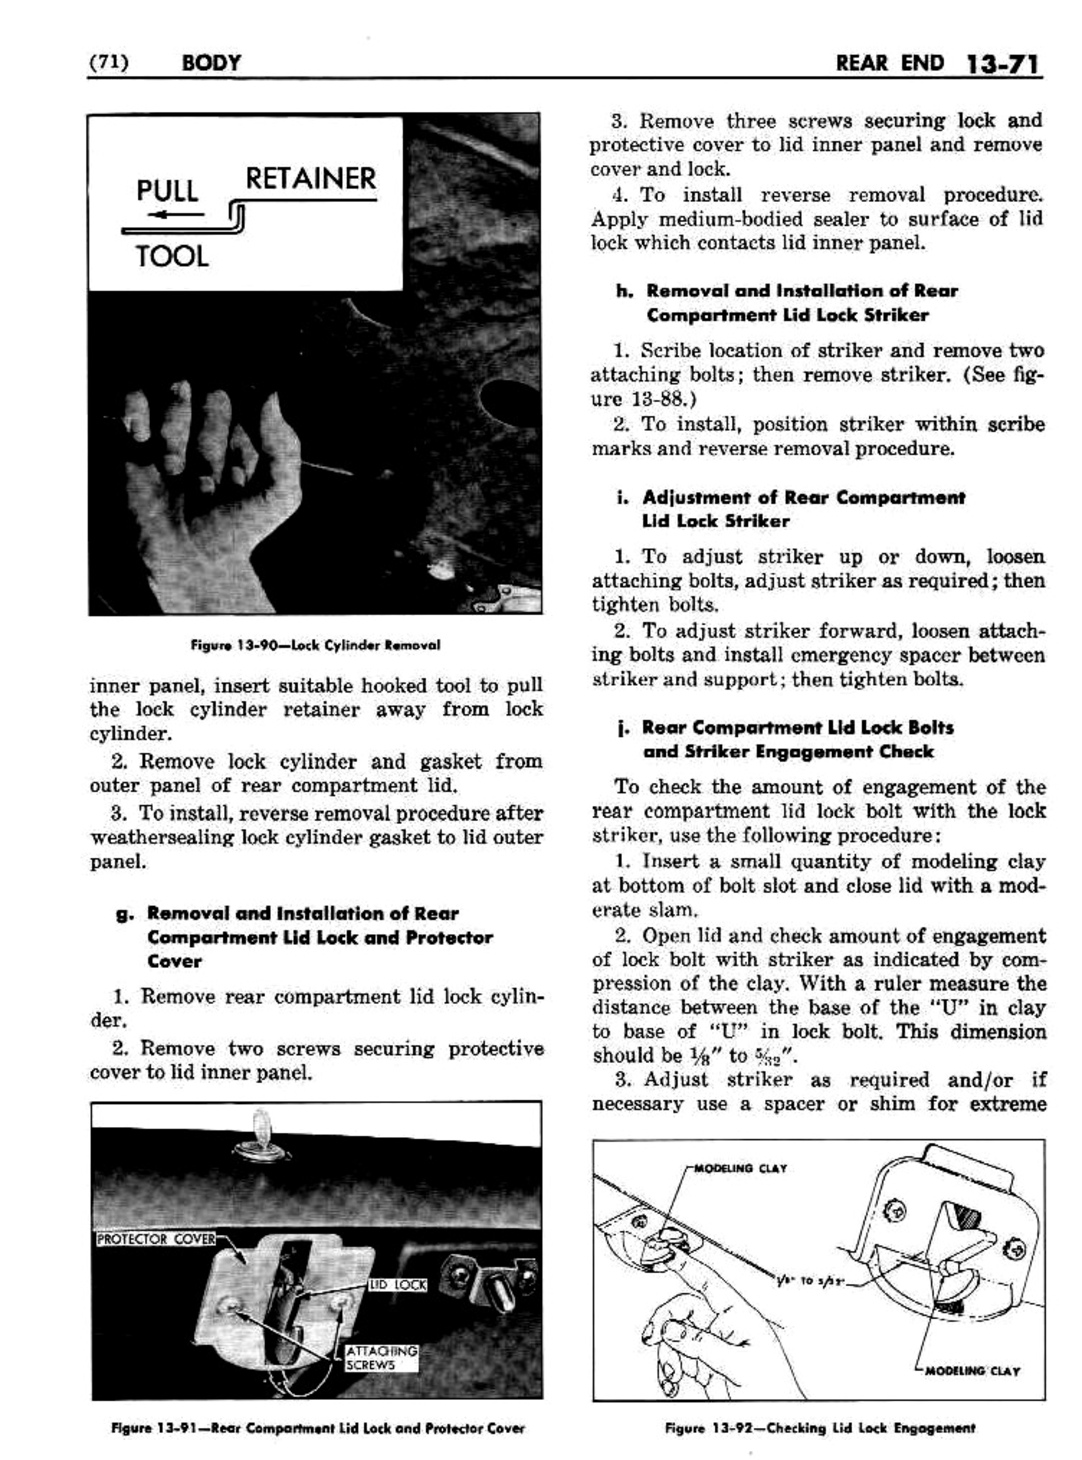 n_1958 Buick Body Service Manual-072-072.jpg